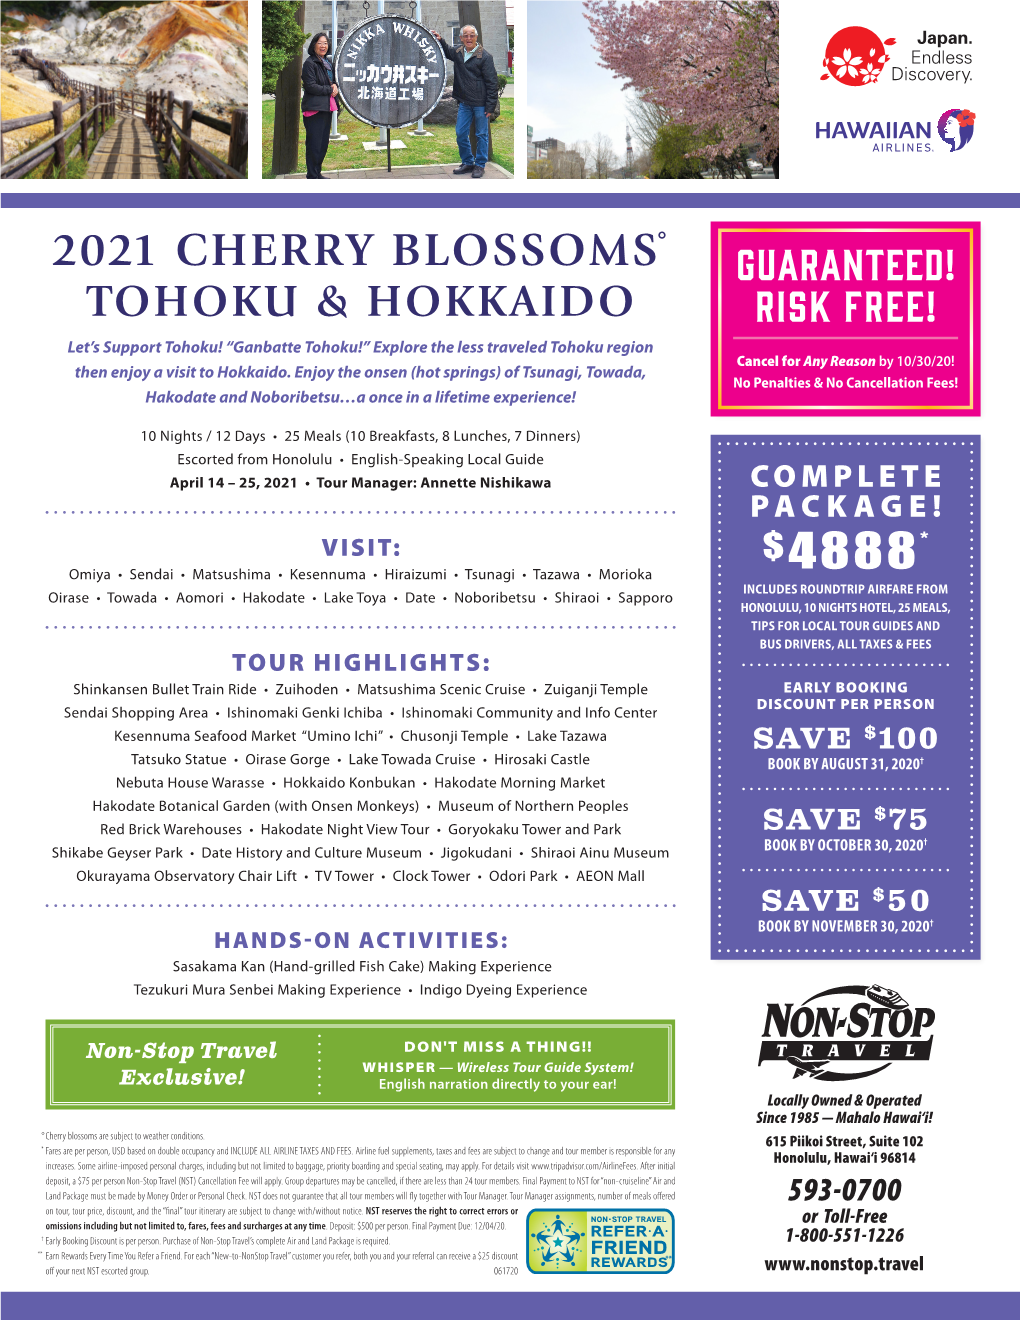 2021 Cherry Blossoms° $4888*